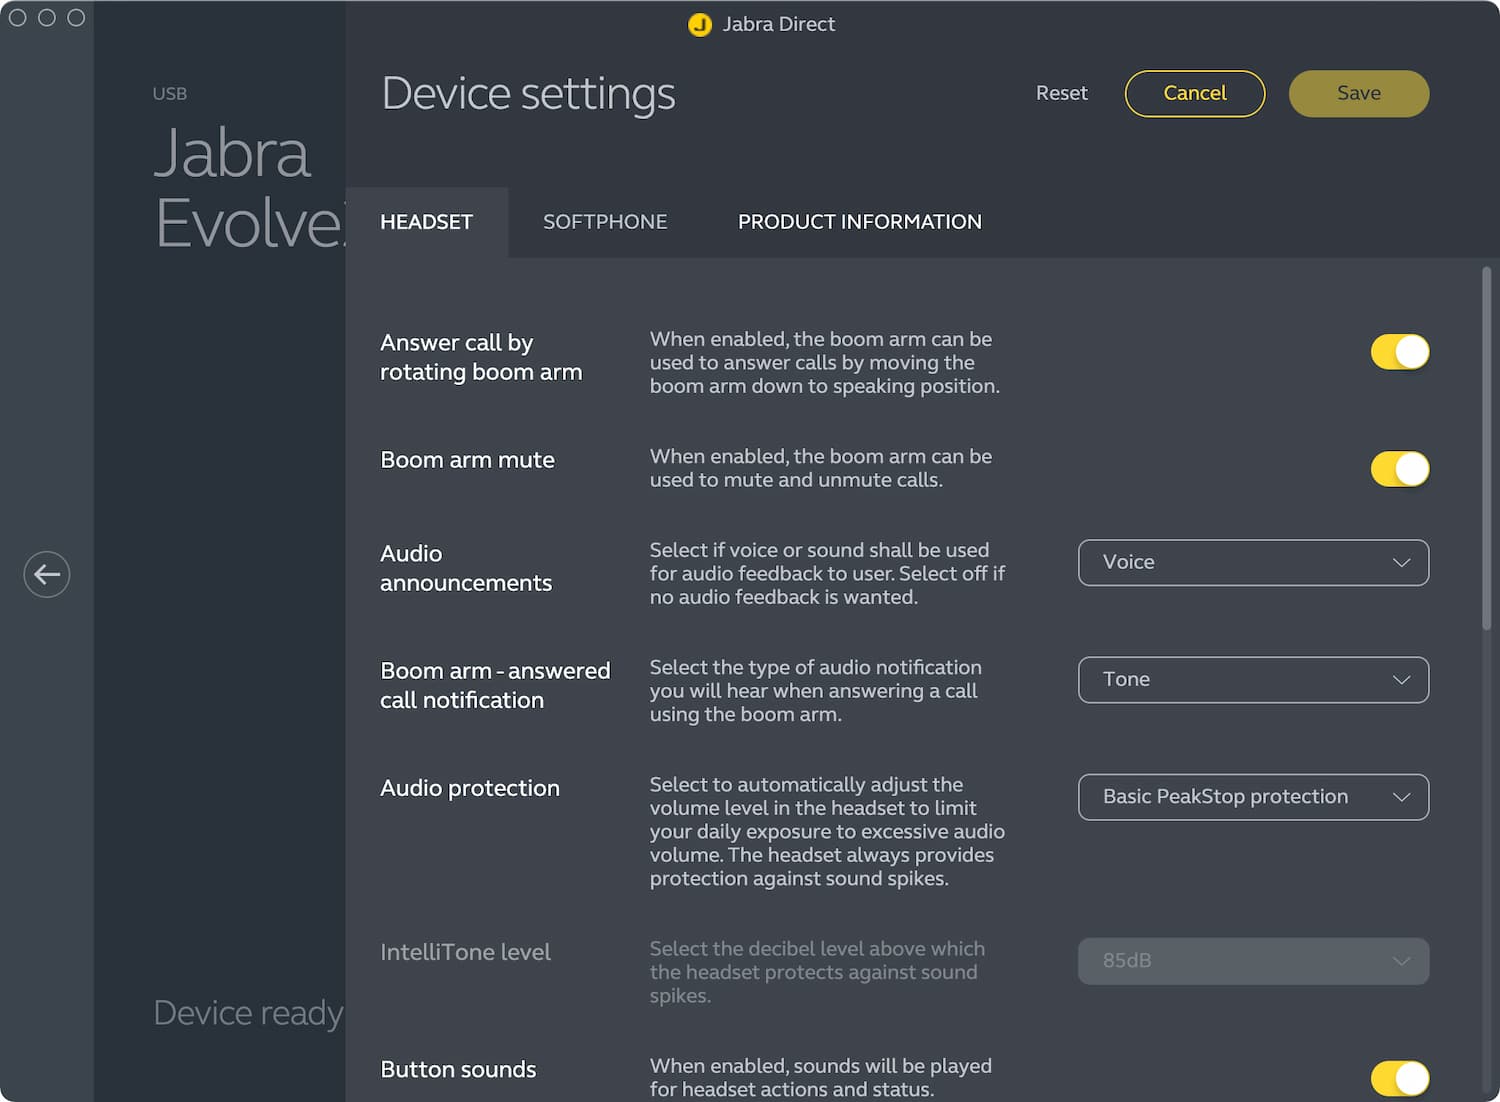 Jabra Direct (Device settings)